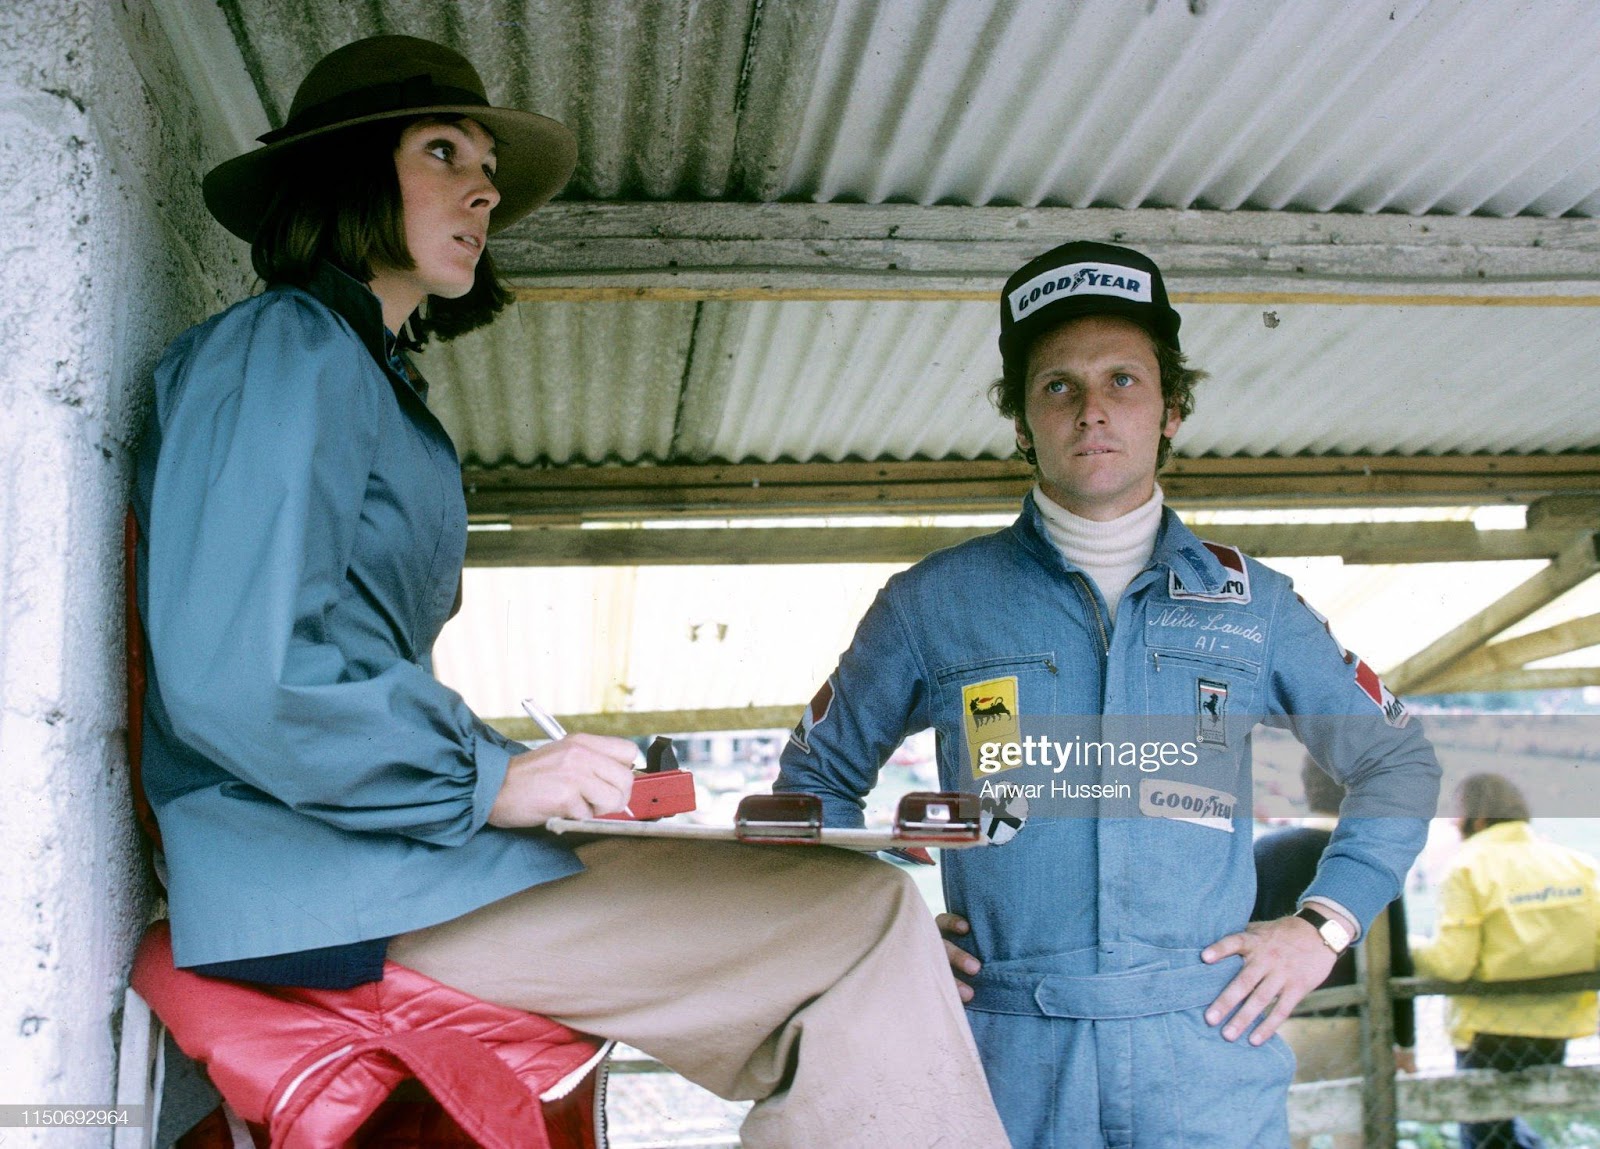 Niki Lauda and his girlfriend